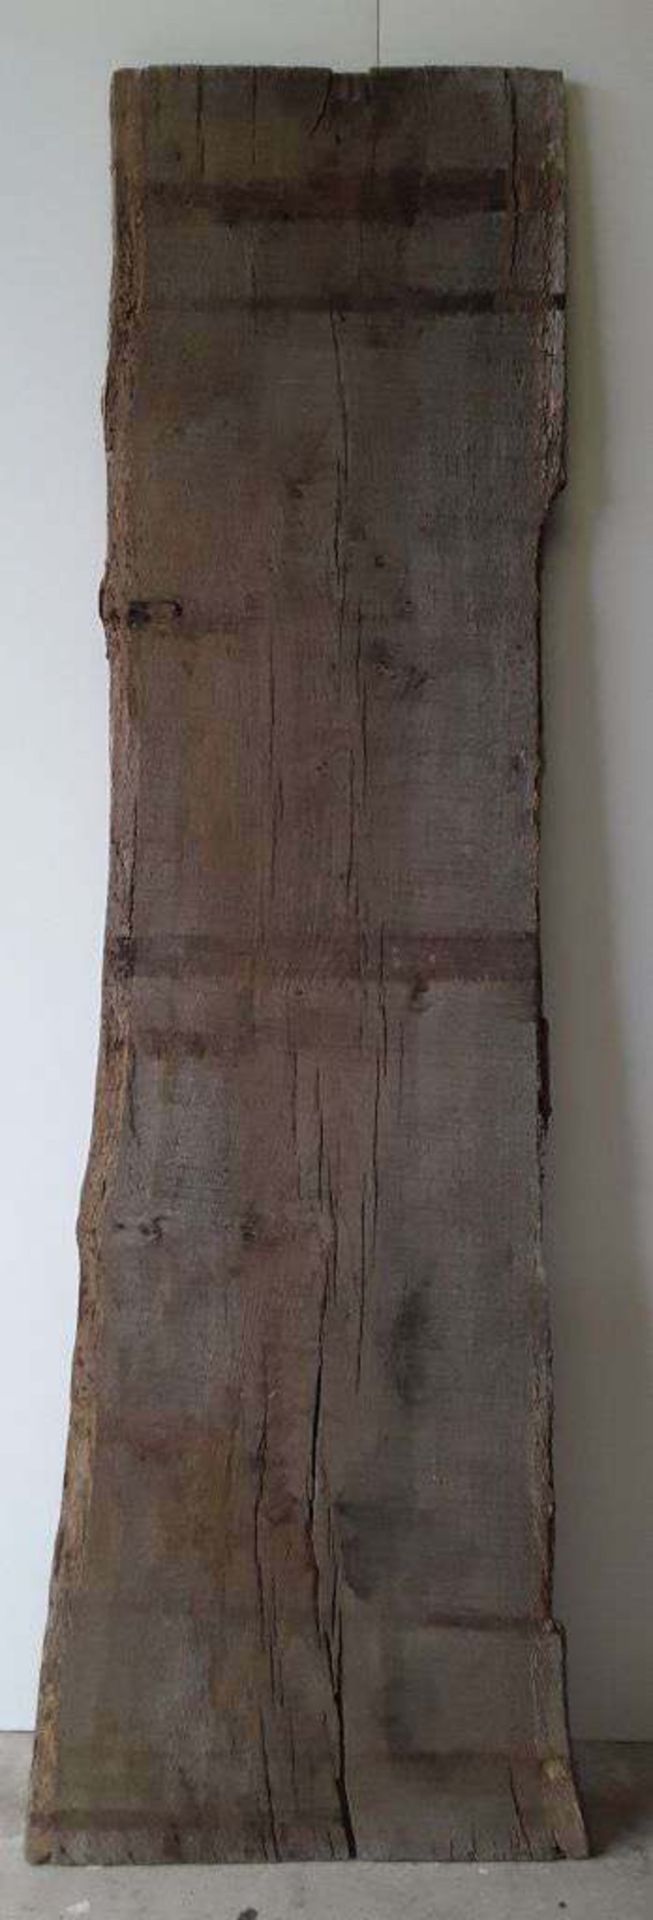 1 x Hardwood Air Dried Sawn Timber Waney Edge / Live Edge English Oak Board / Plank - Image 5 of 5